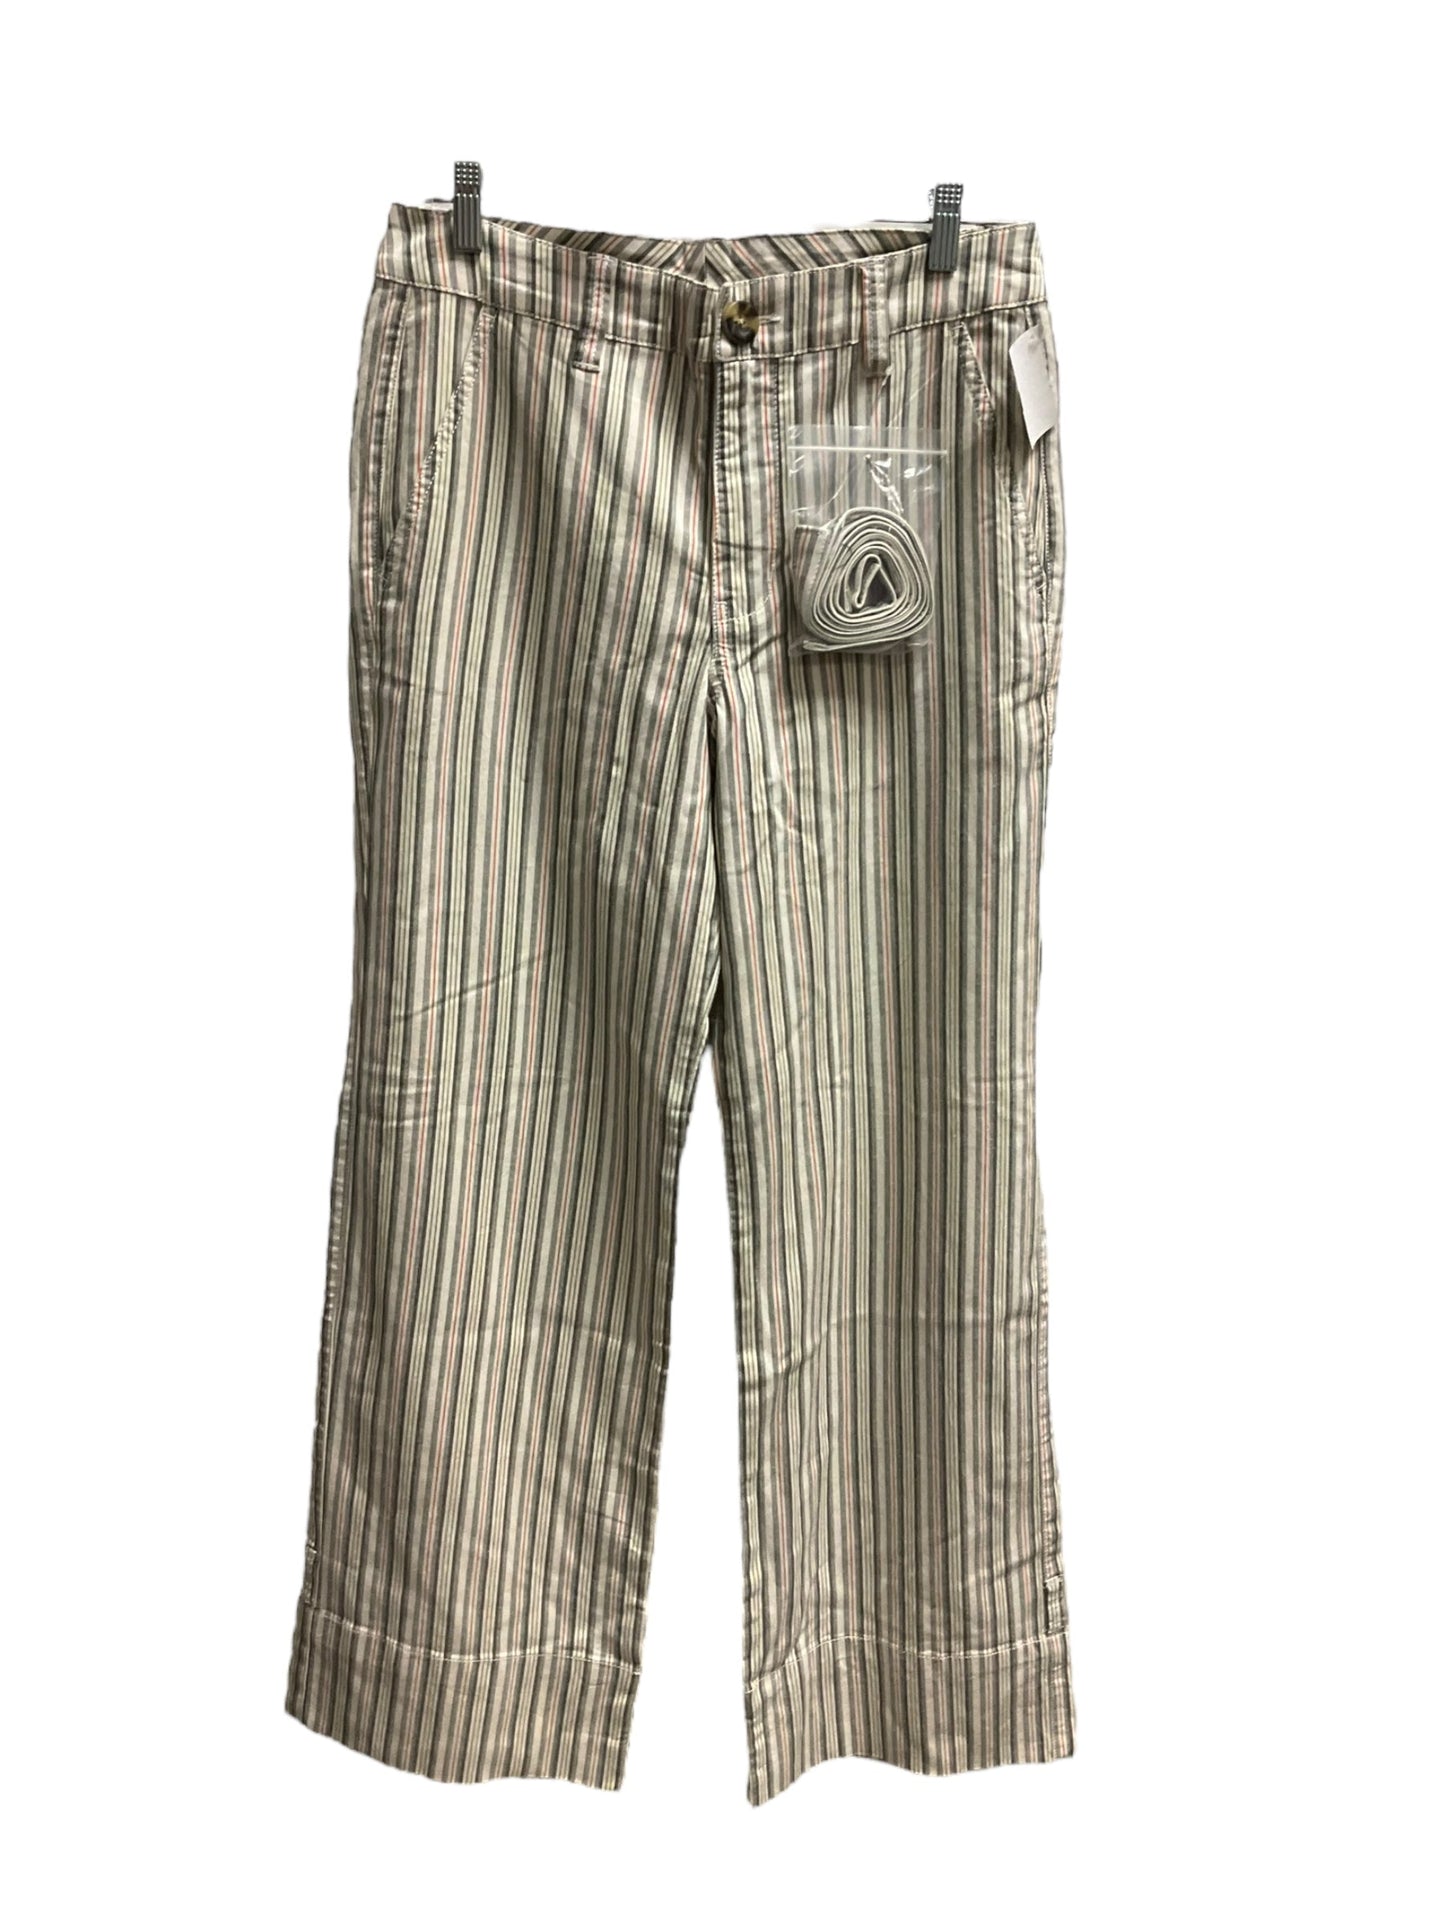 Striped Pattern Pants Other Cabi, Size 6